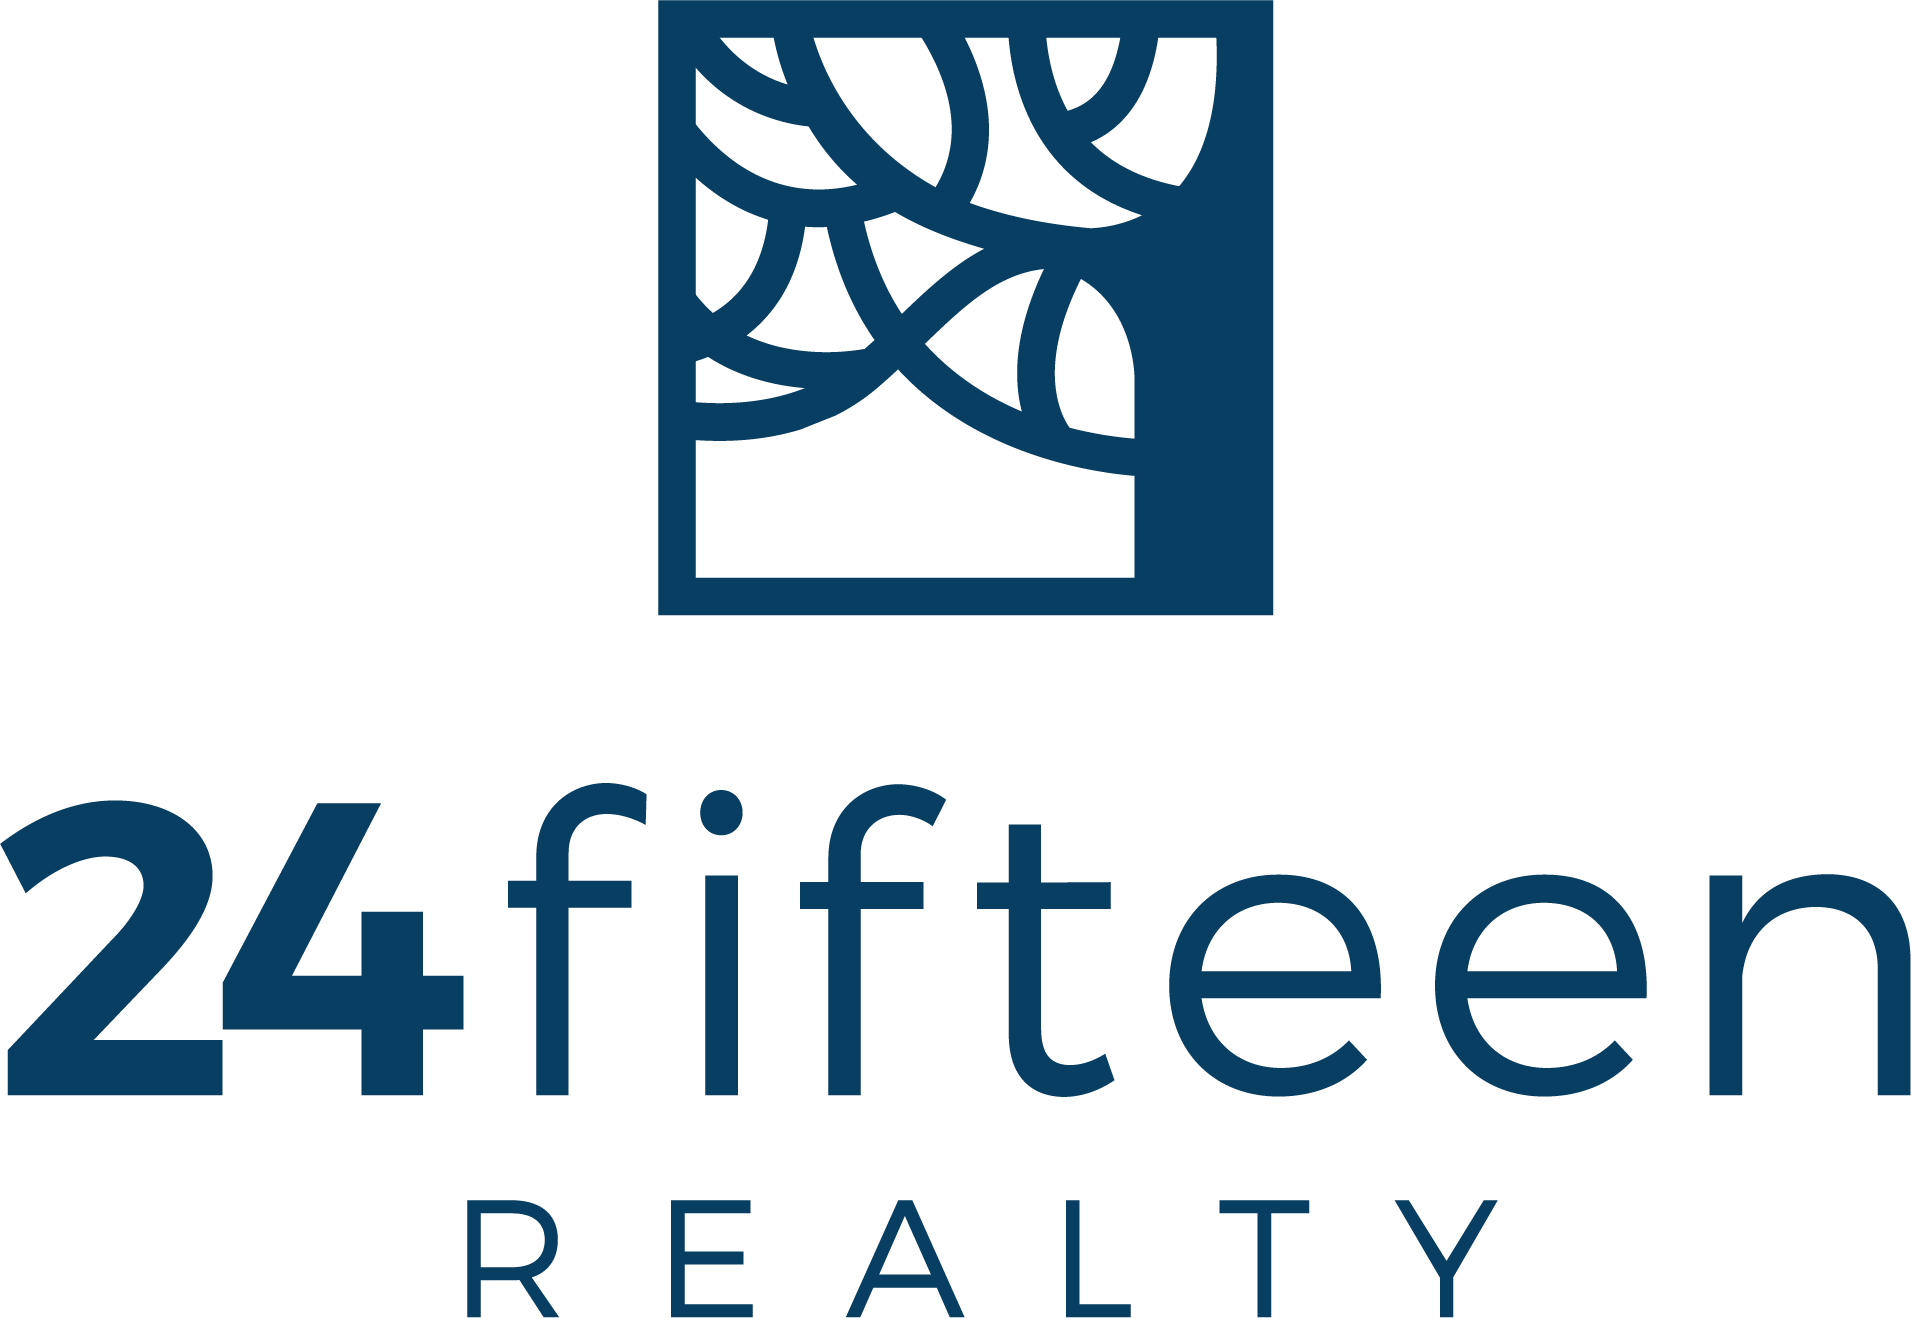 24:15 Realty - DFW Real Estate Brokerage